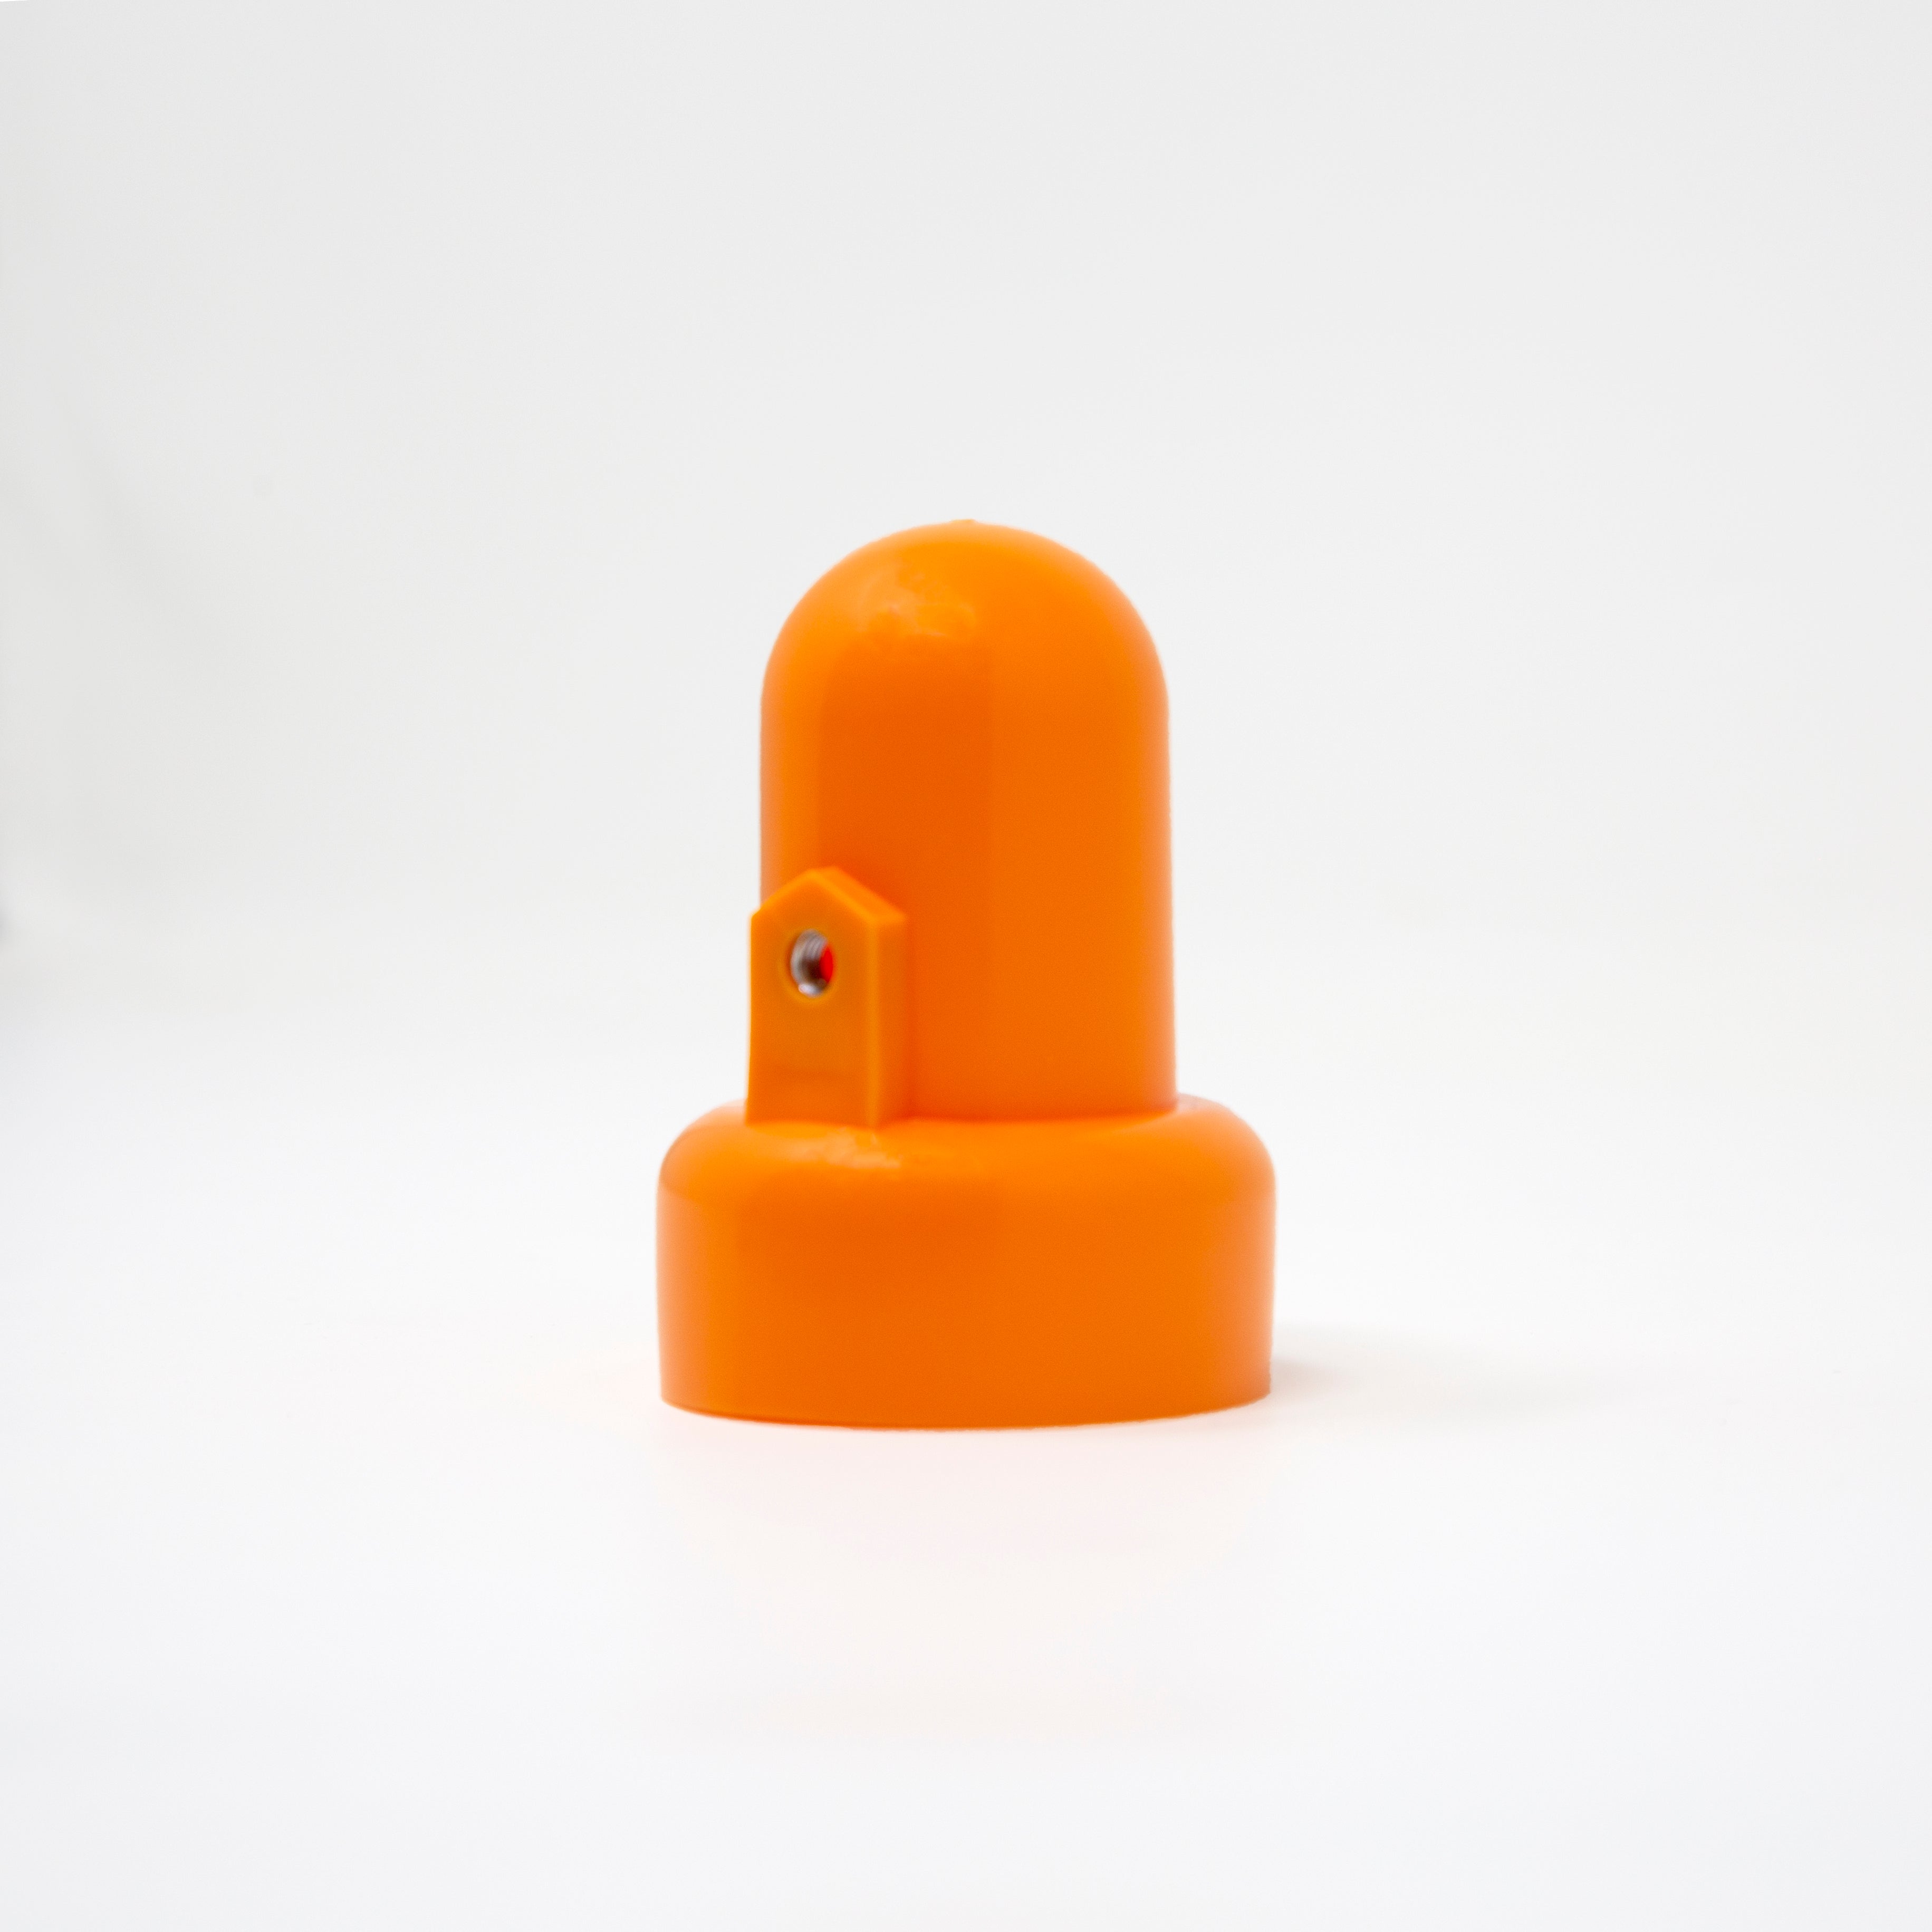 Pole Cap - Small Orange - Qty 4